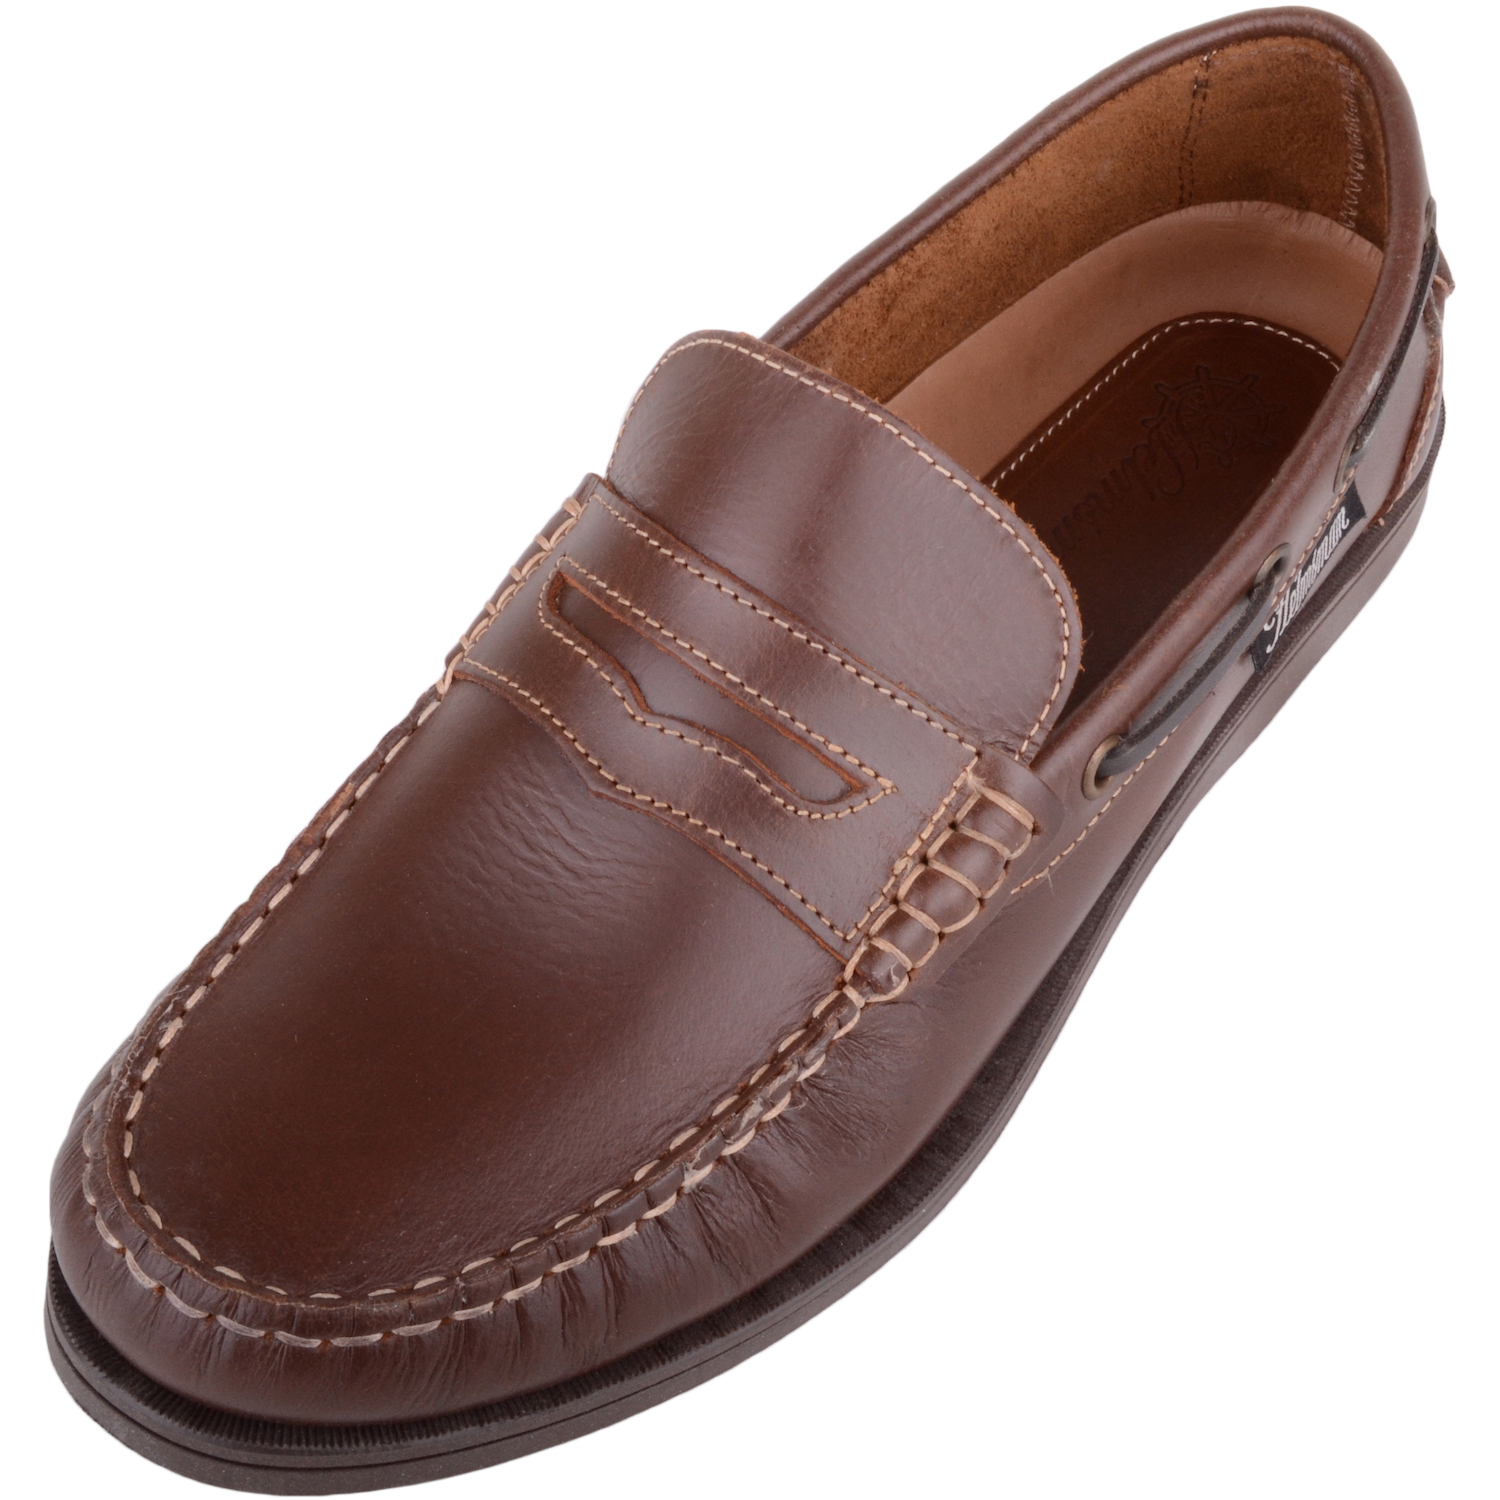 Men's Genuine Leather Summer Slip On Boat / Deck Shoes - Absolute Footwear